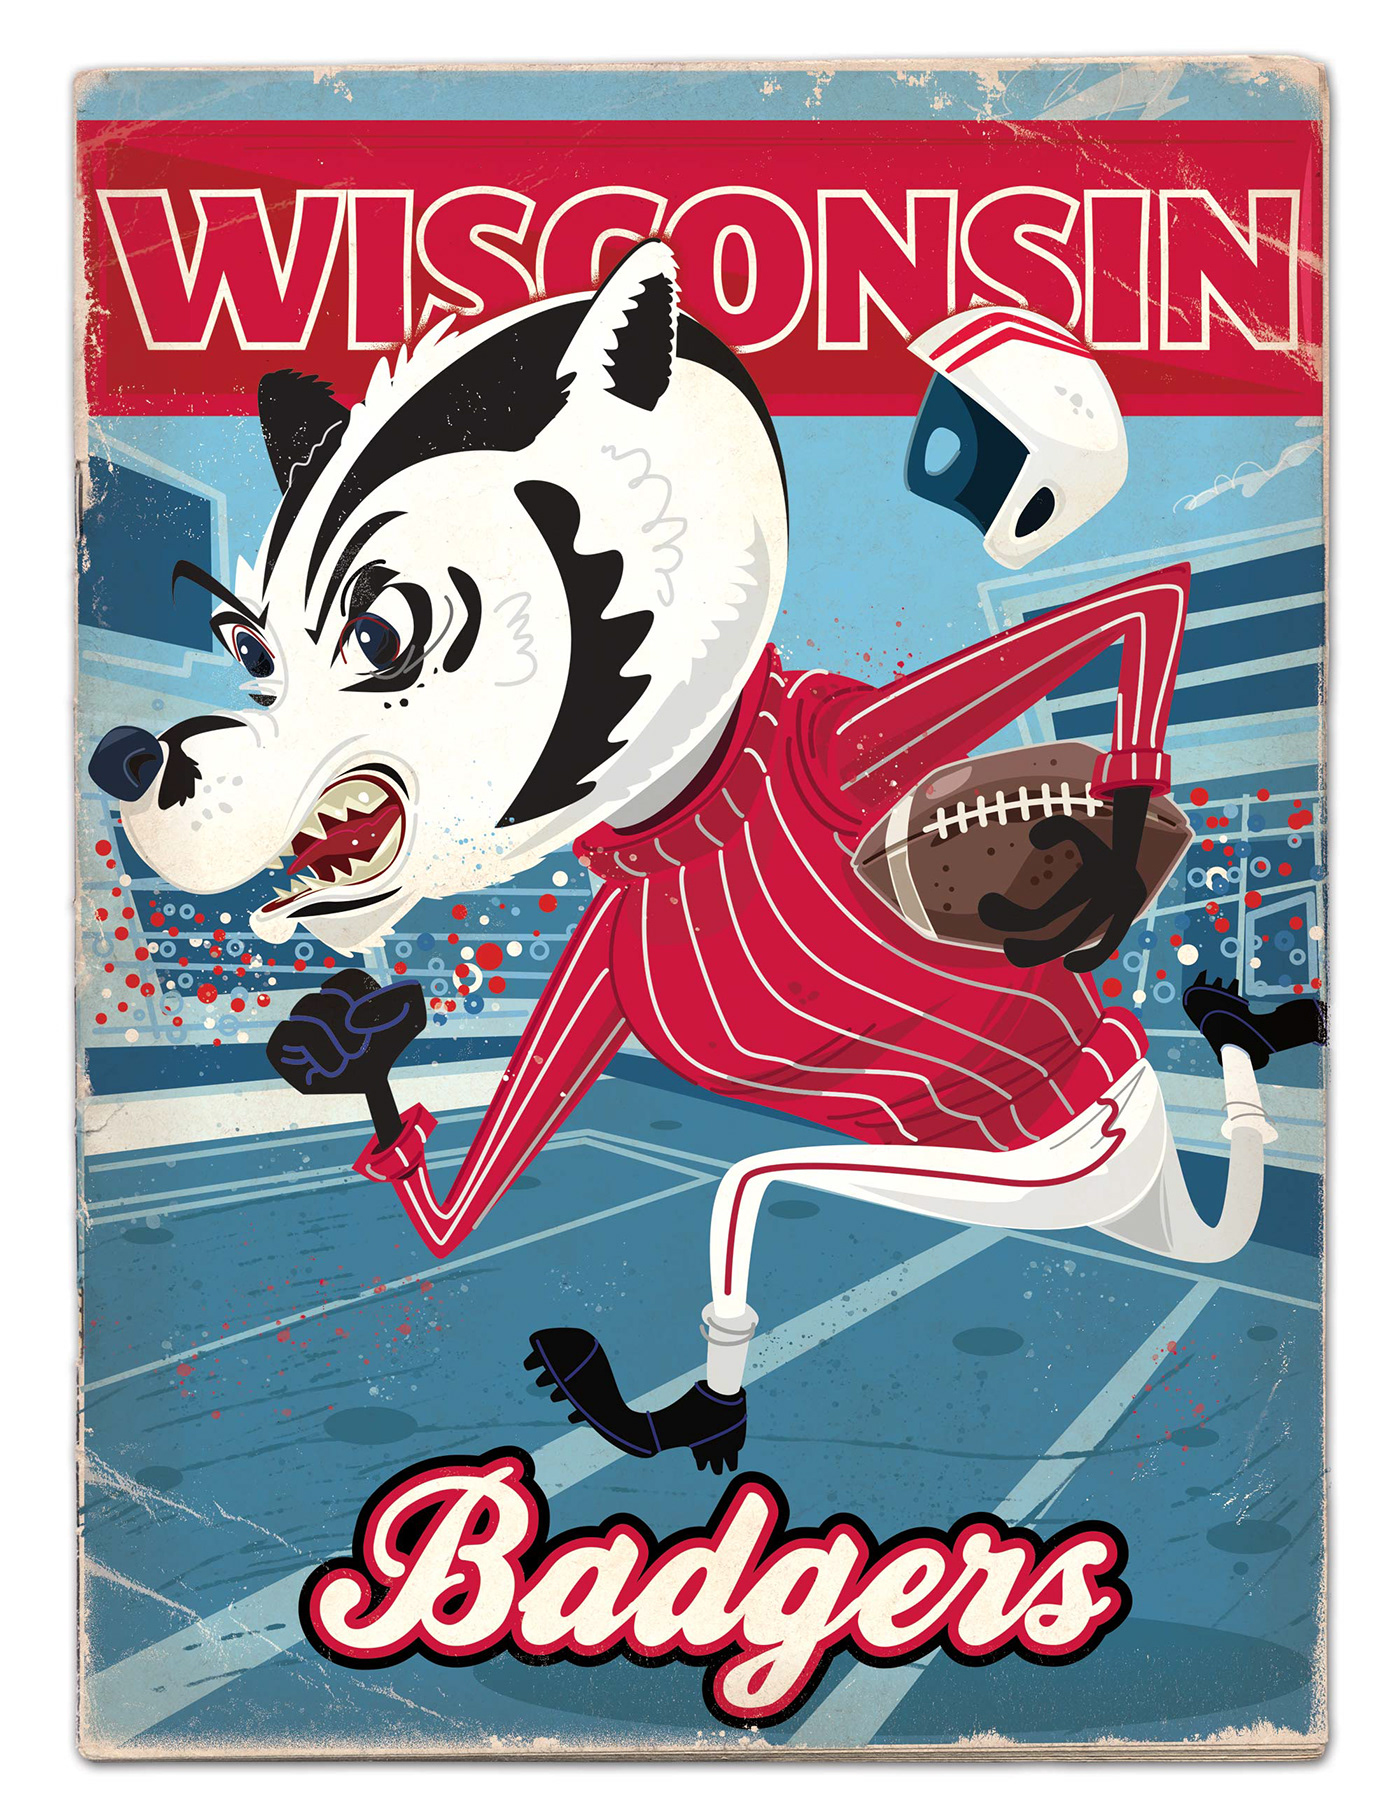 animal badger character design， college Football poster Mascot